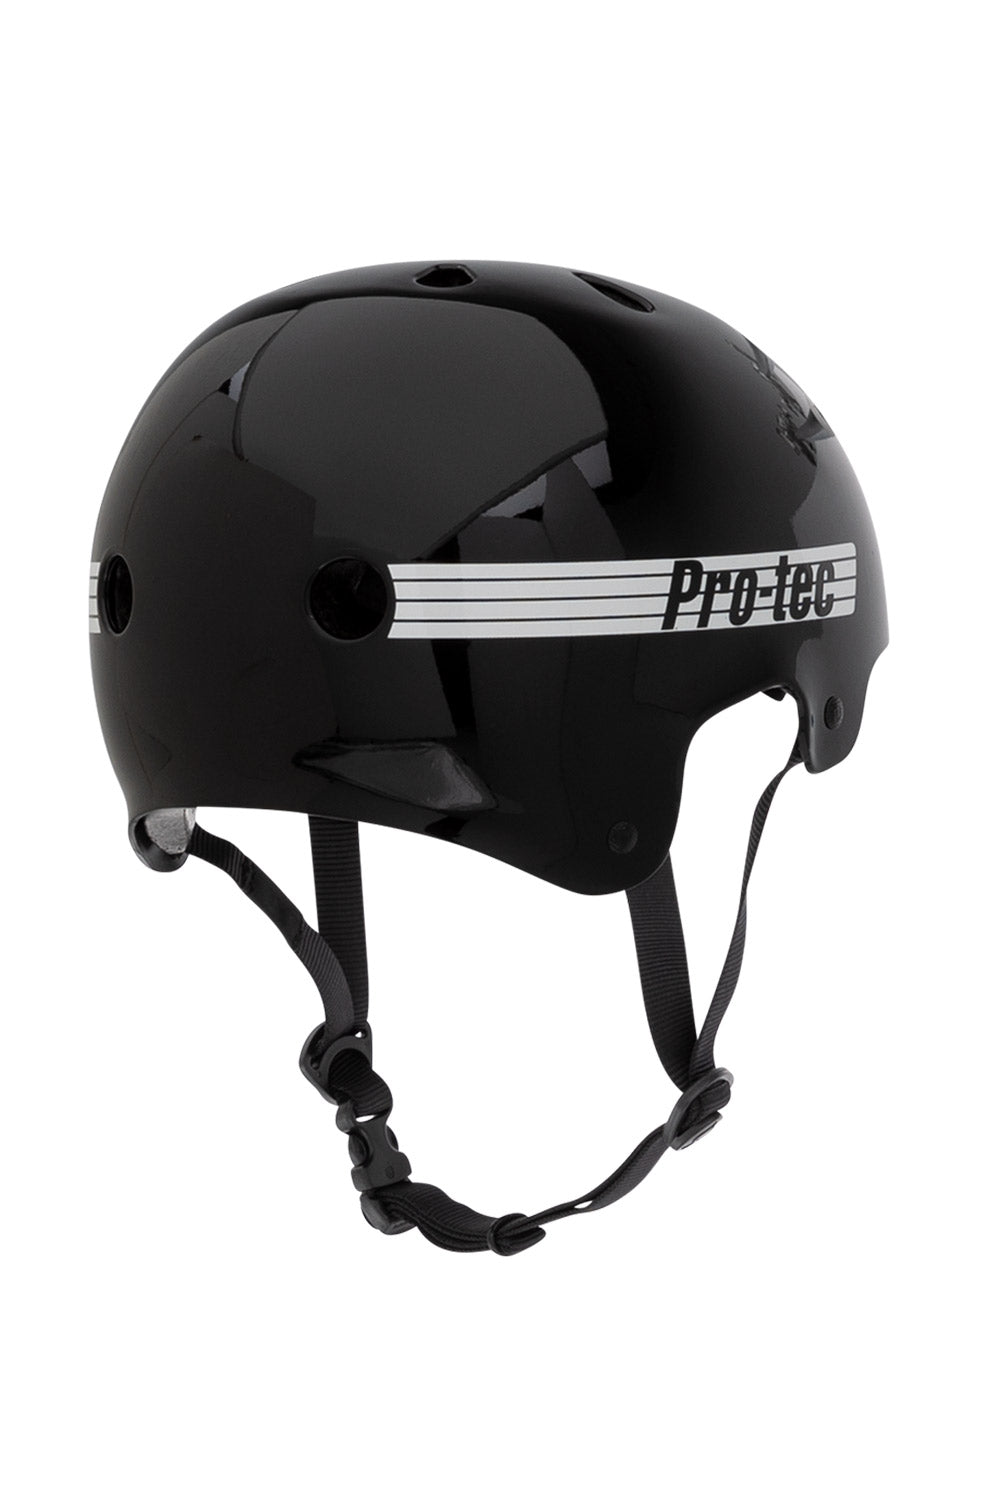 Pro-Tec Old School Classic Certified Helmet - Gloss Black